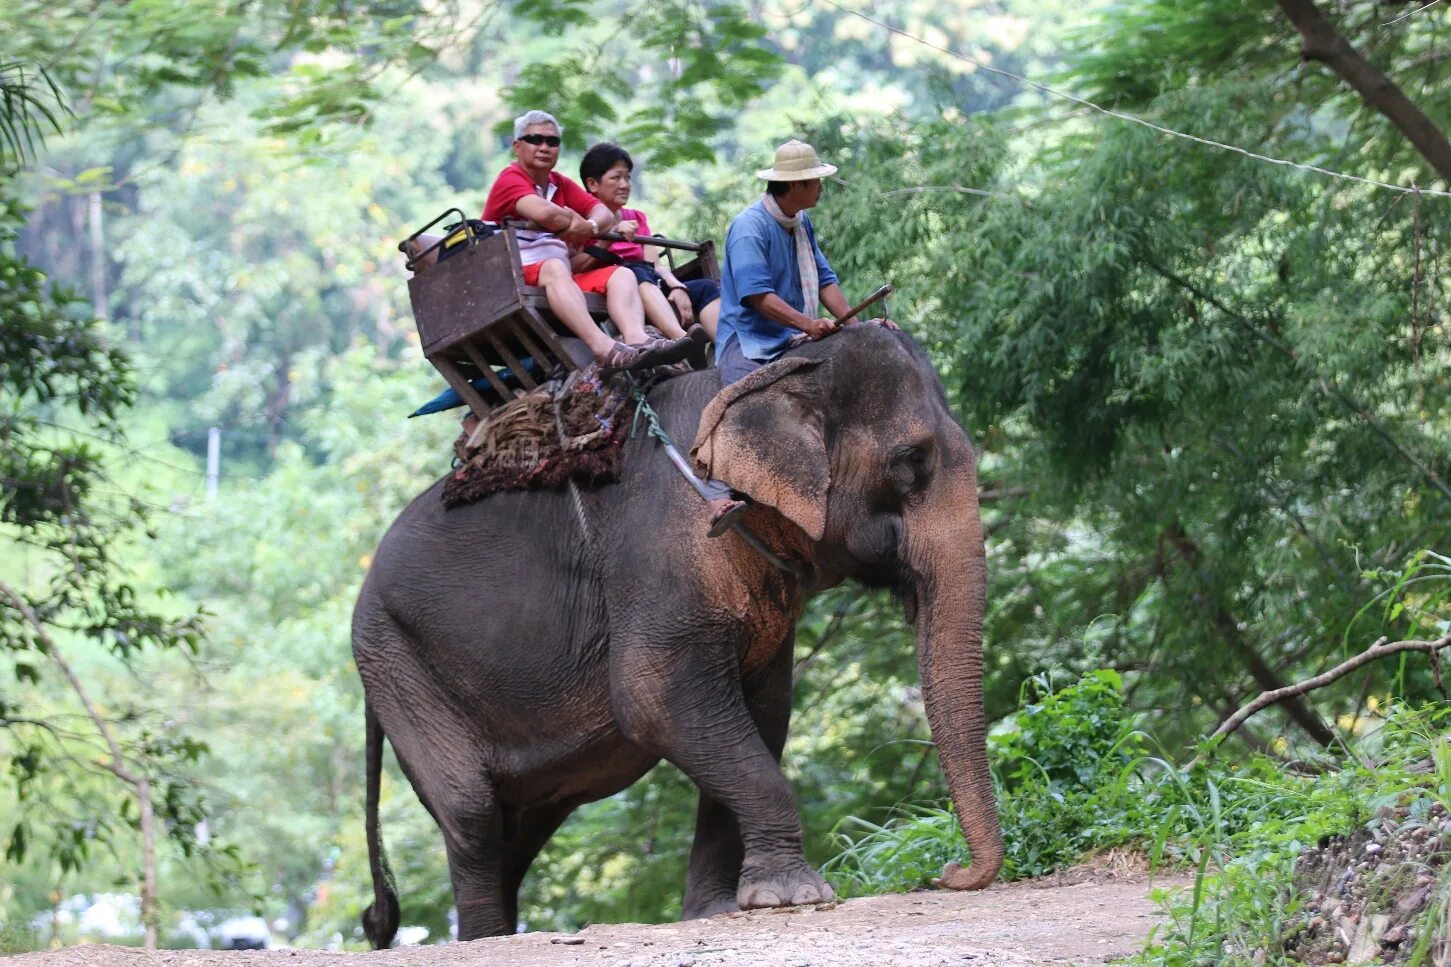 Animal ride. Туризм с животными. Ride an Elephant. Riding an Elephant.